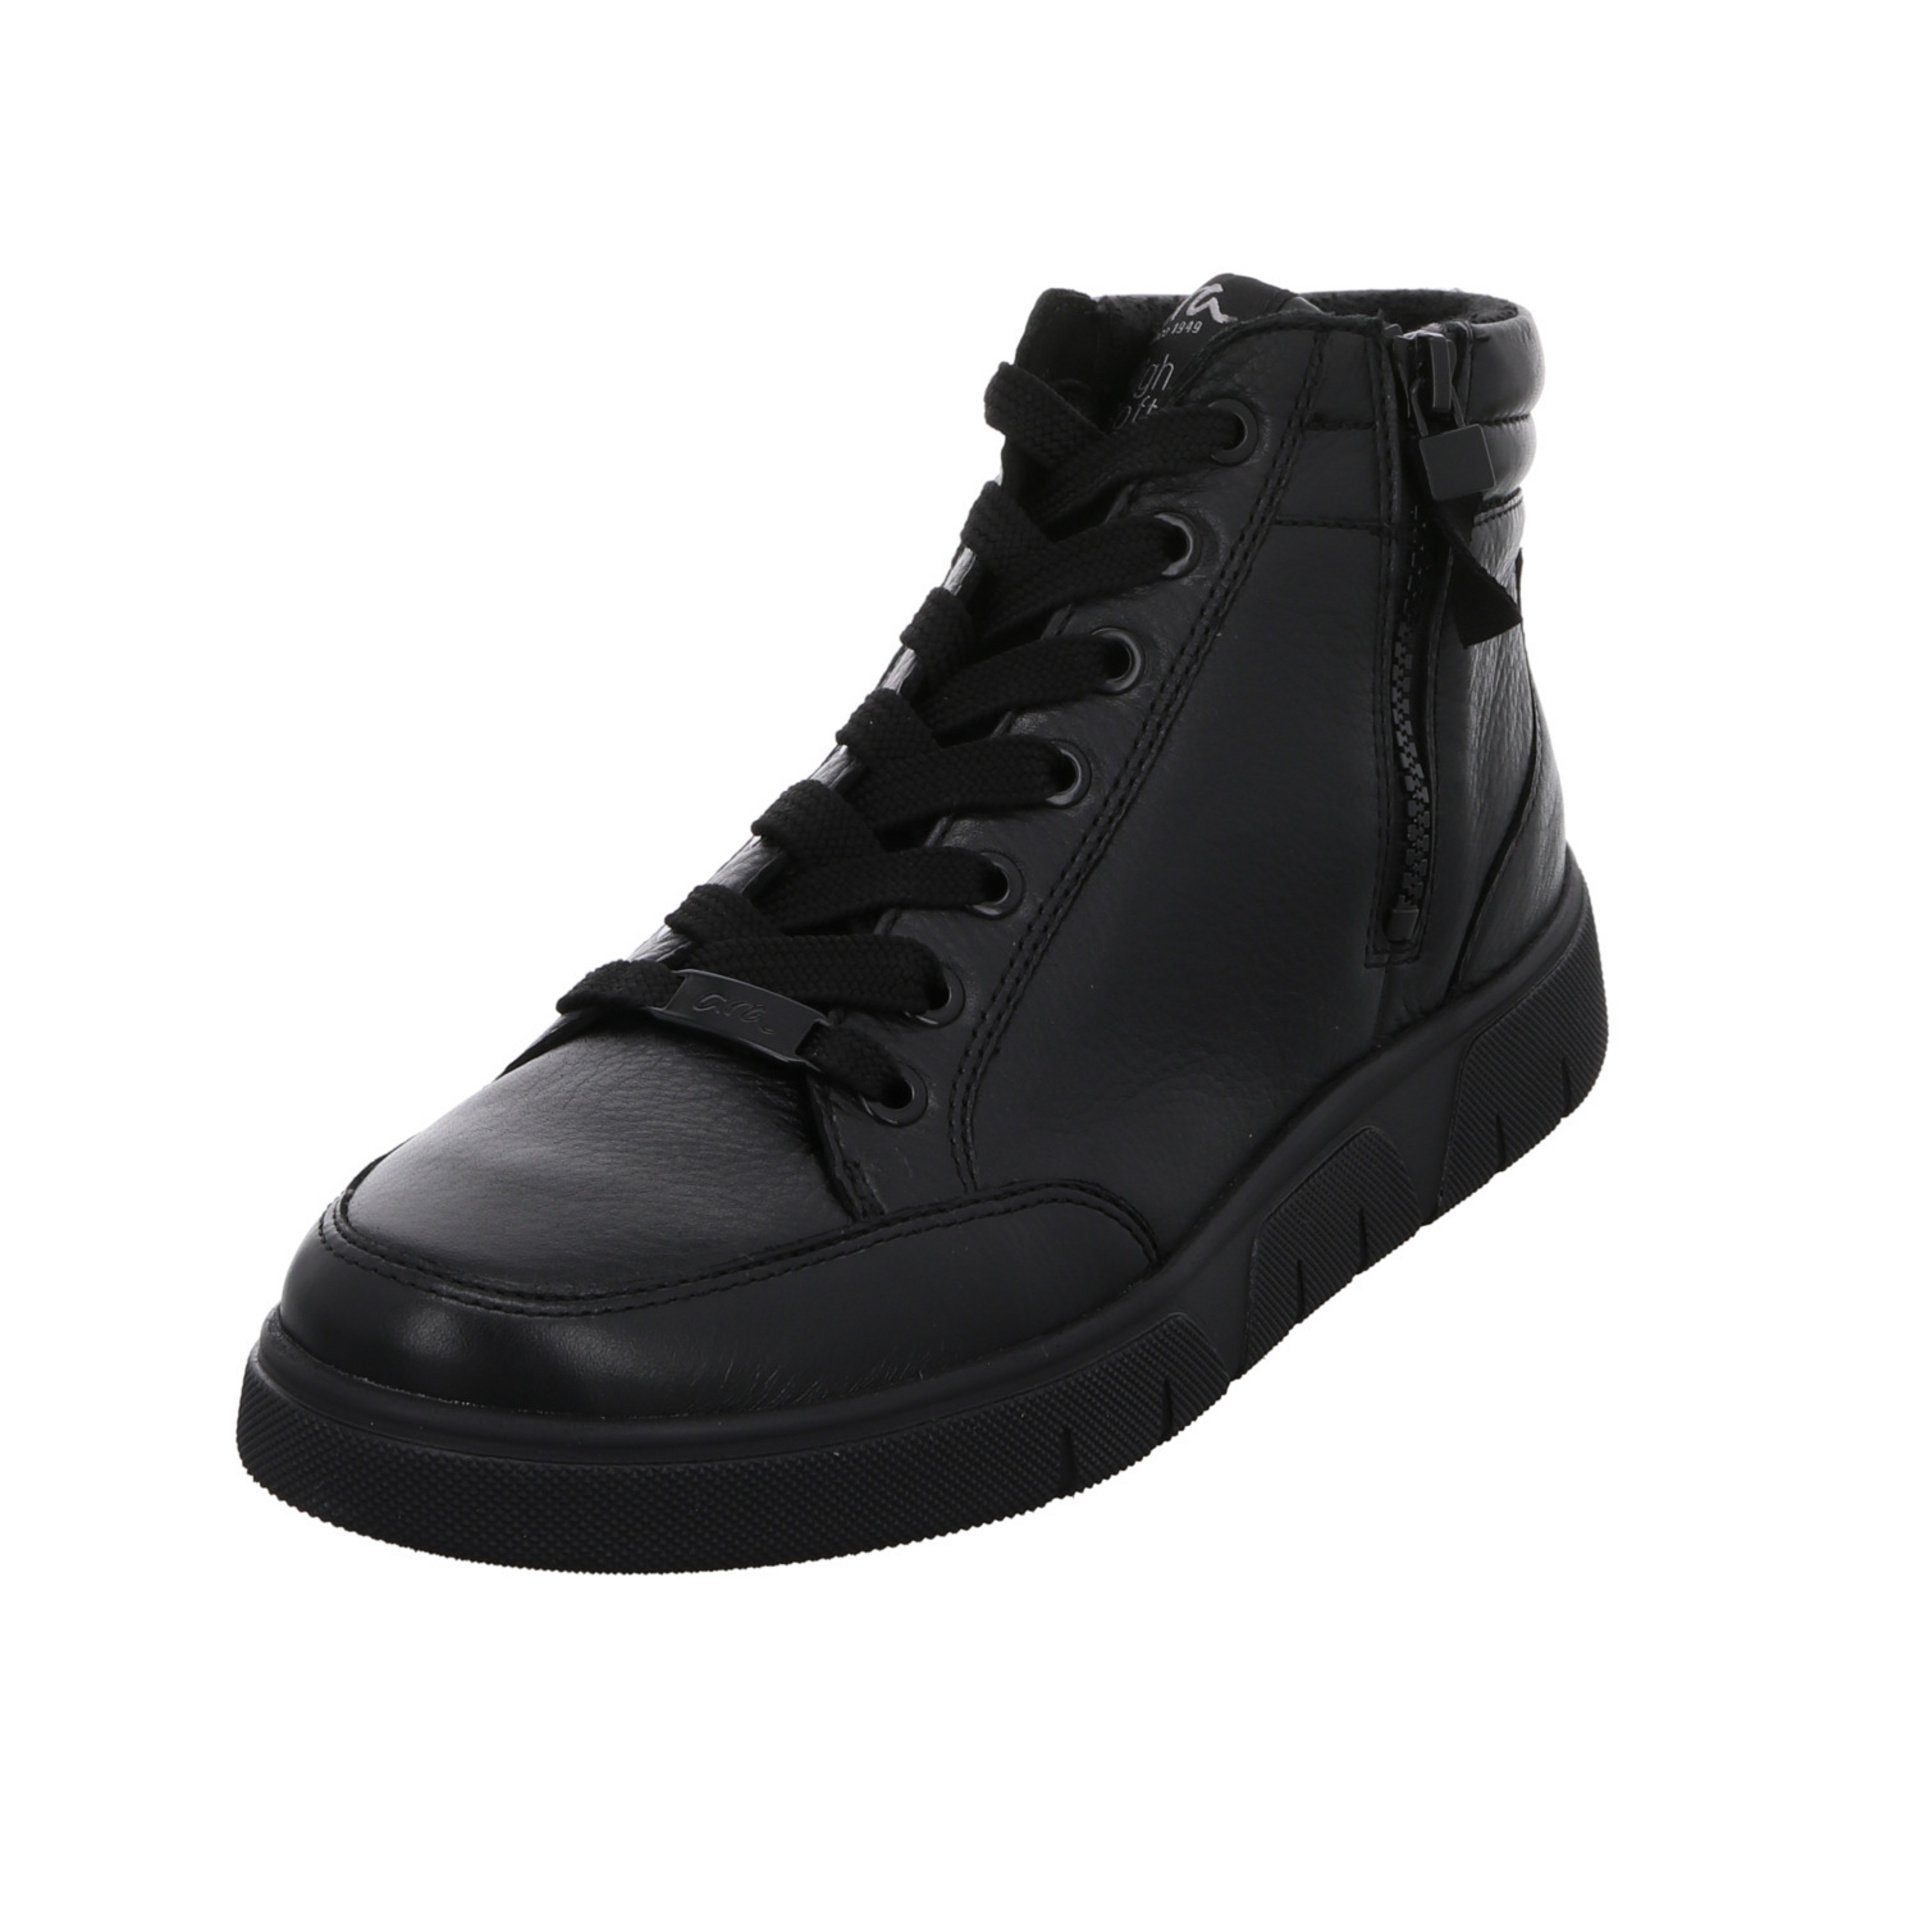 Ara Damen Sneaker Schuhe Rom-Sport 2.0 Sneaker Schnürstiefelette Glattleder schwarz 046706